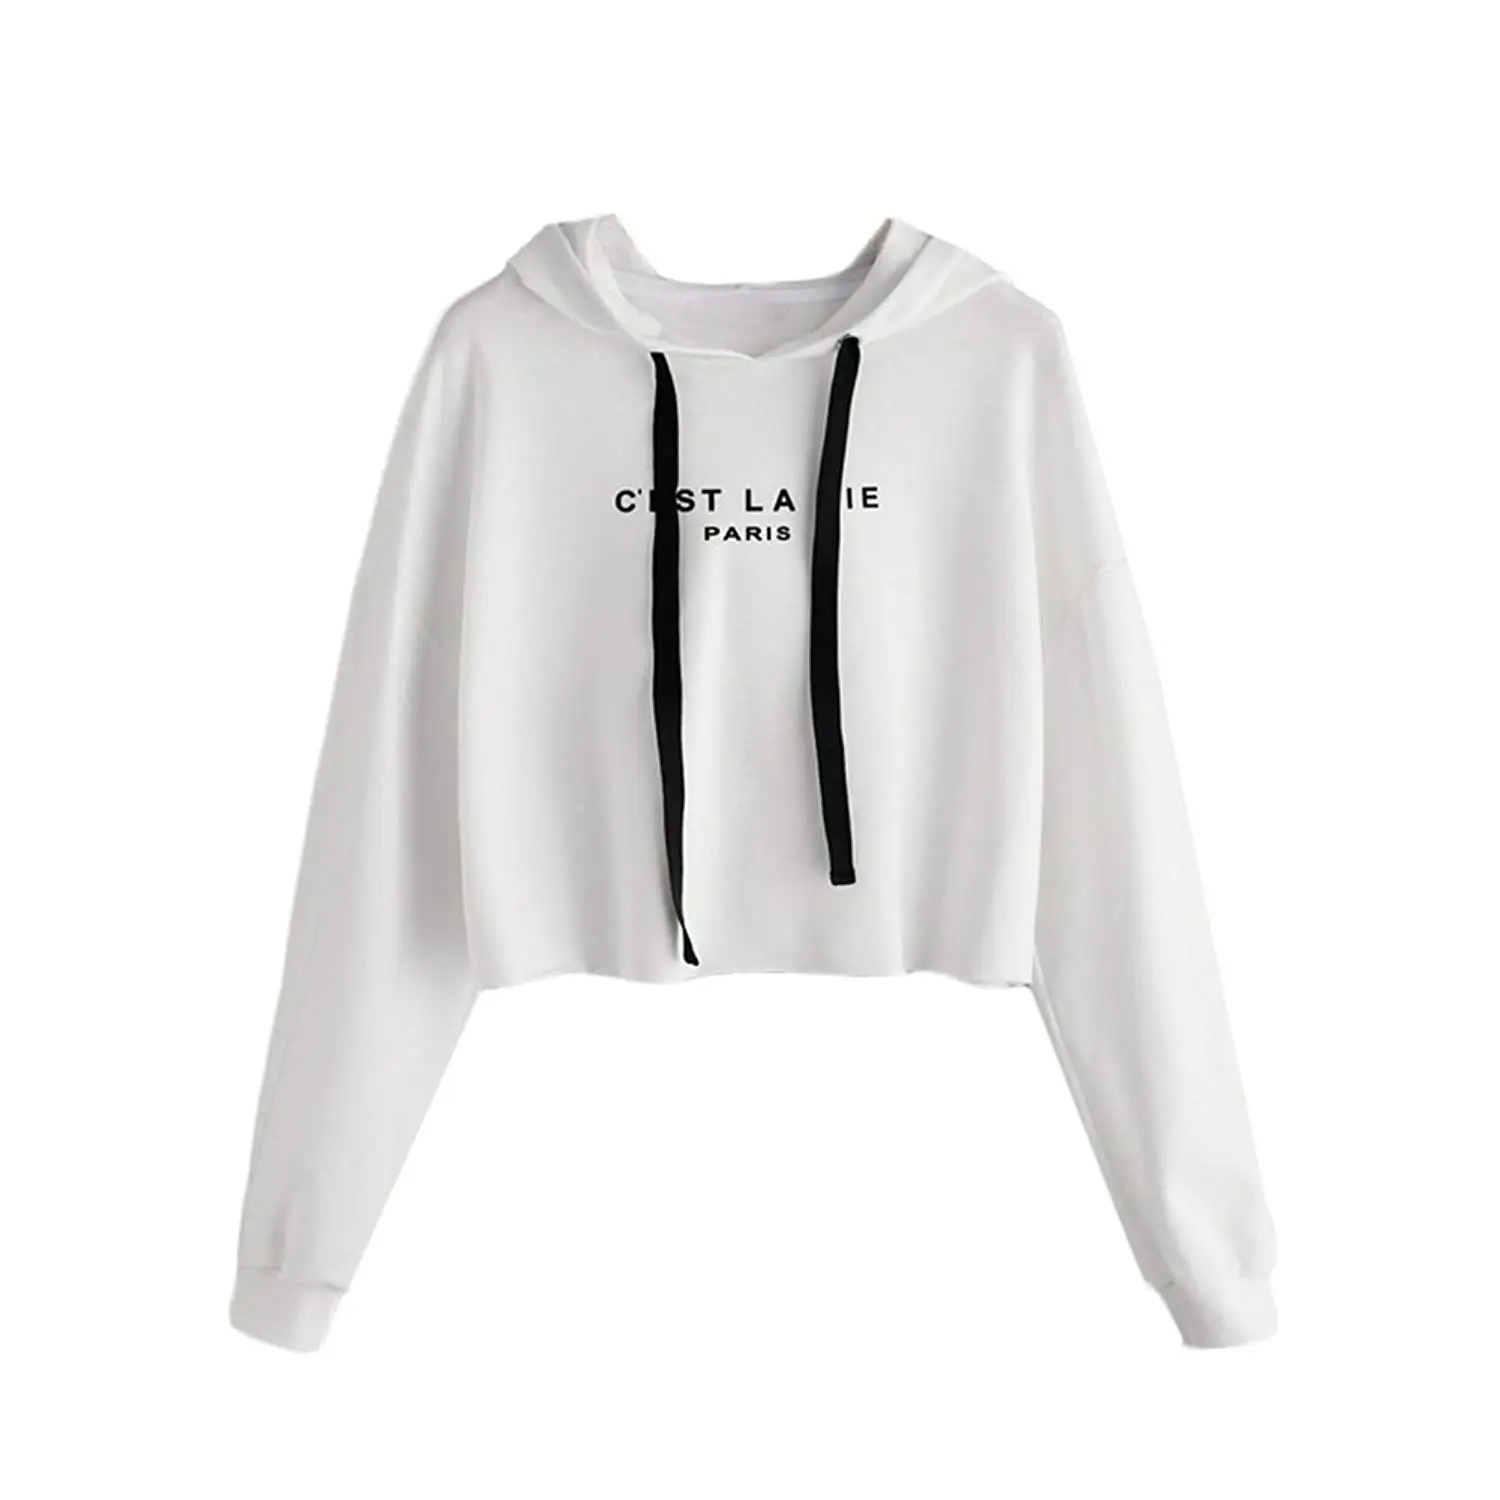 hoodies for girls price